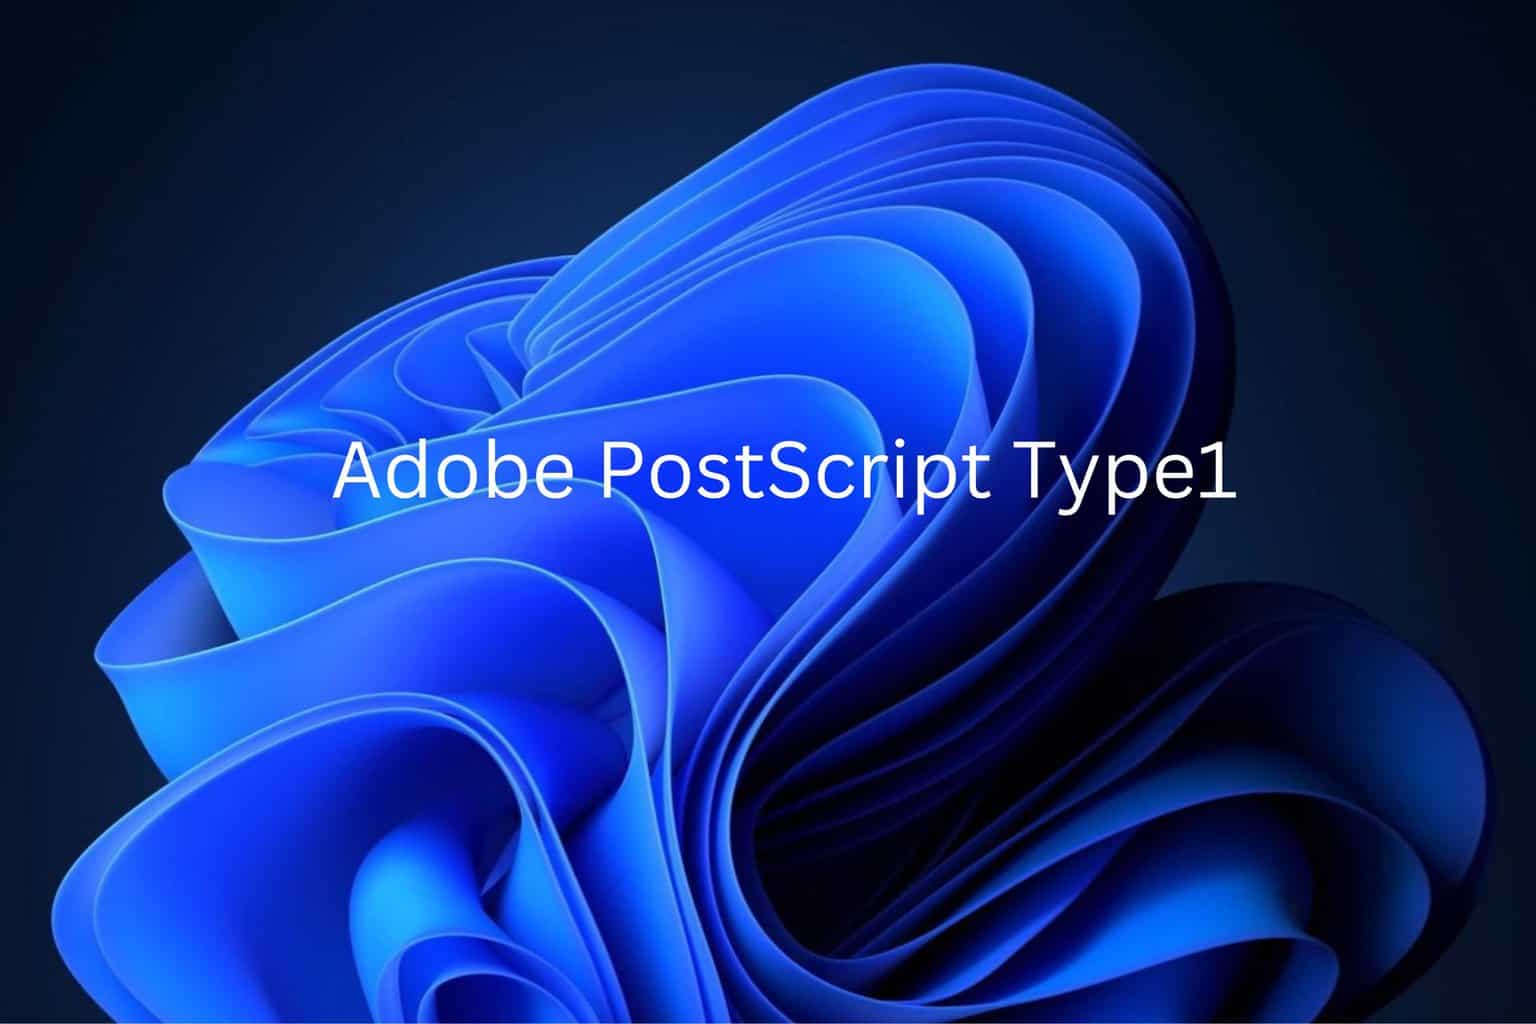 PostScript Type1